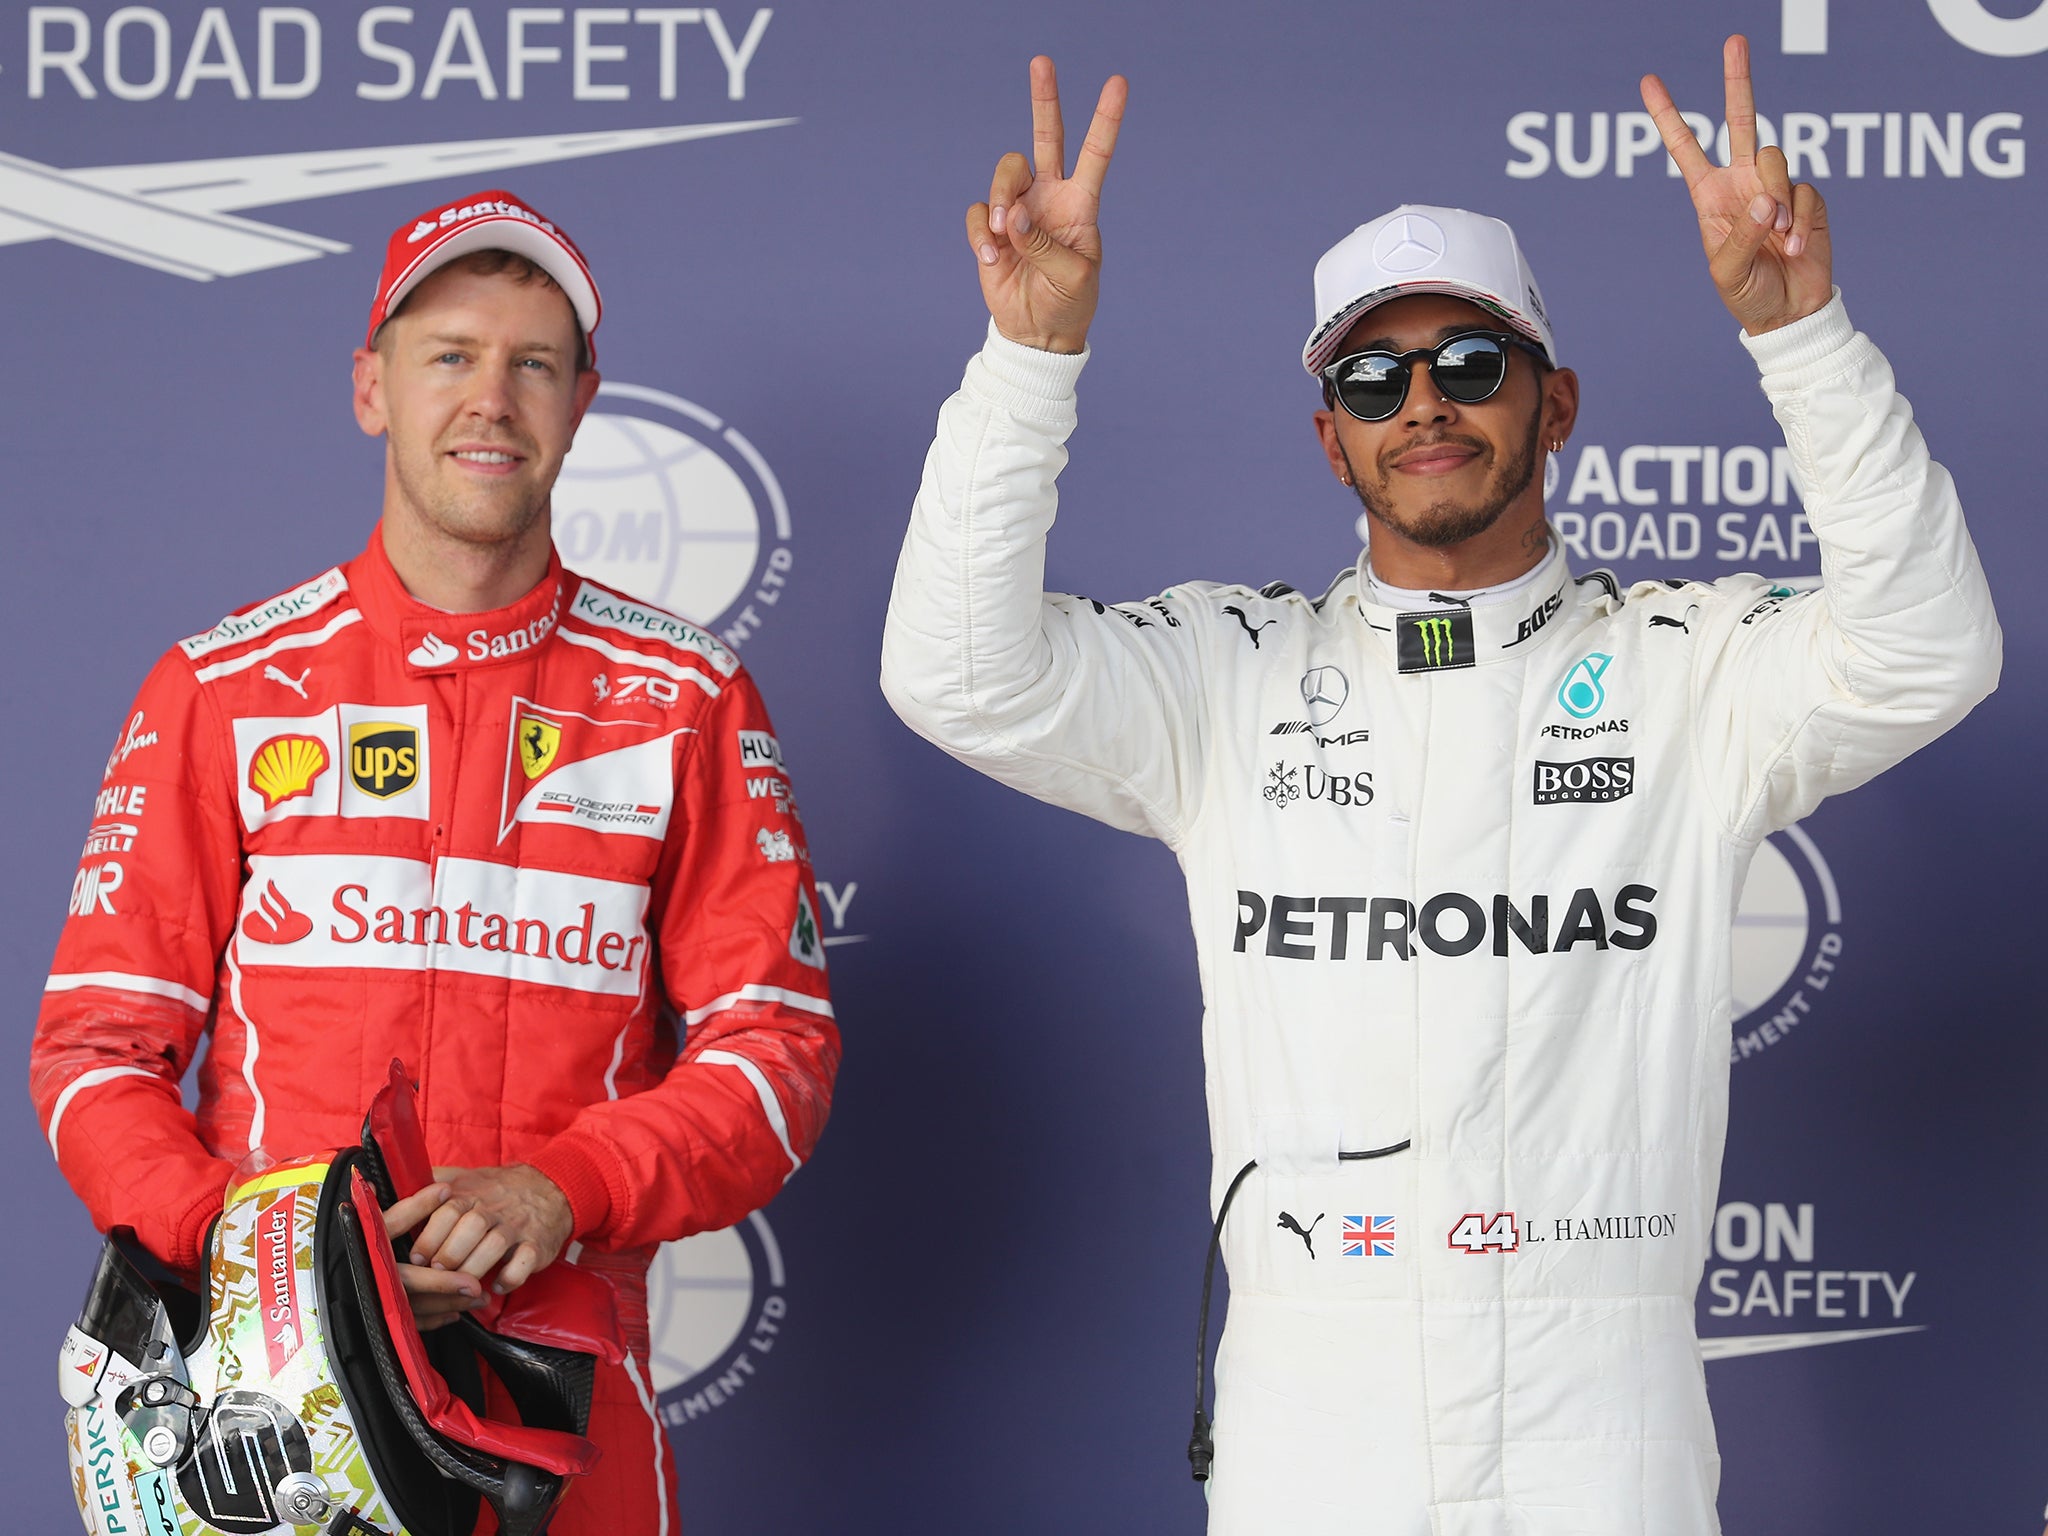 Lewis Hamilton will start ahead of Sebastian Vettel in the US Grand Prix